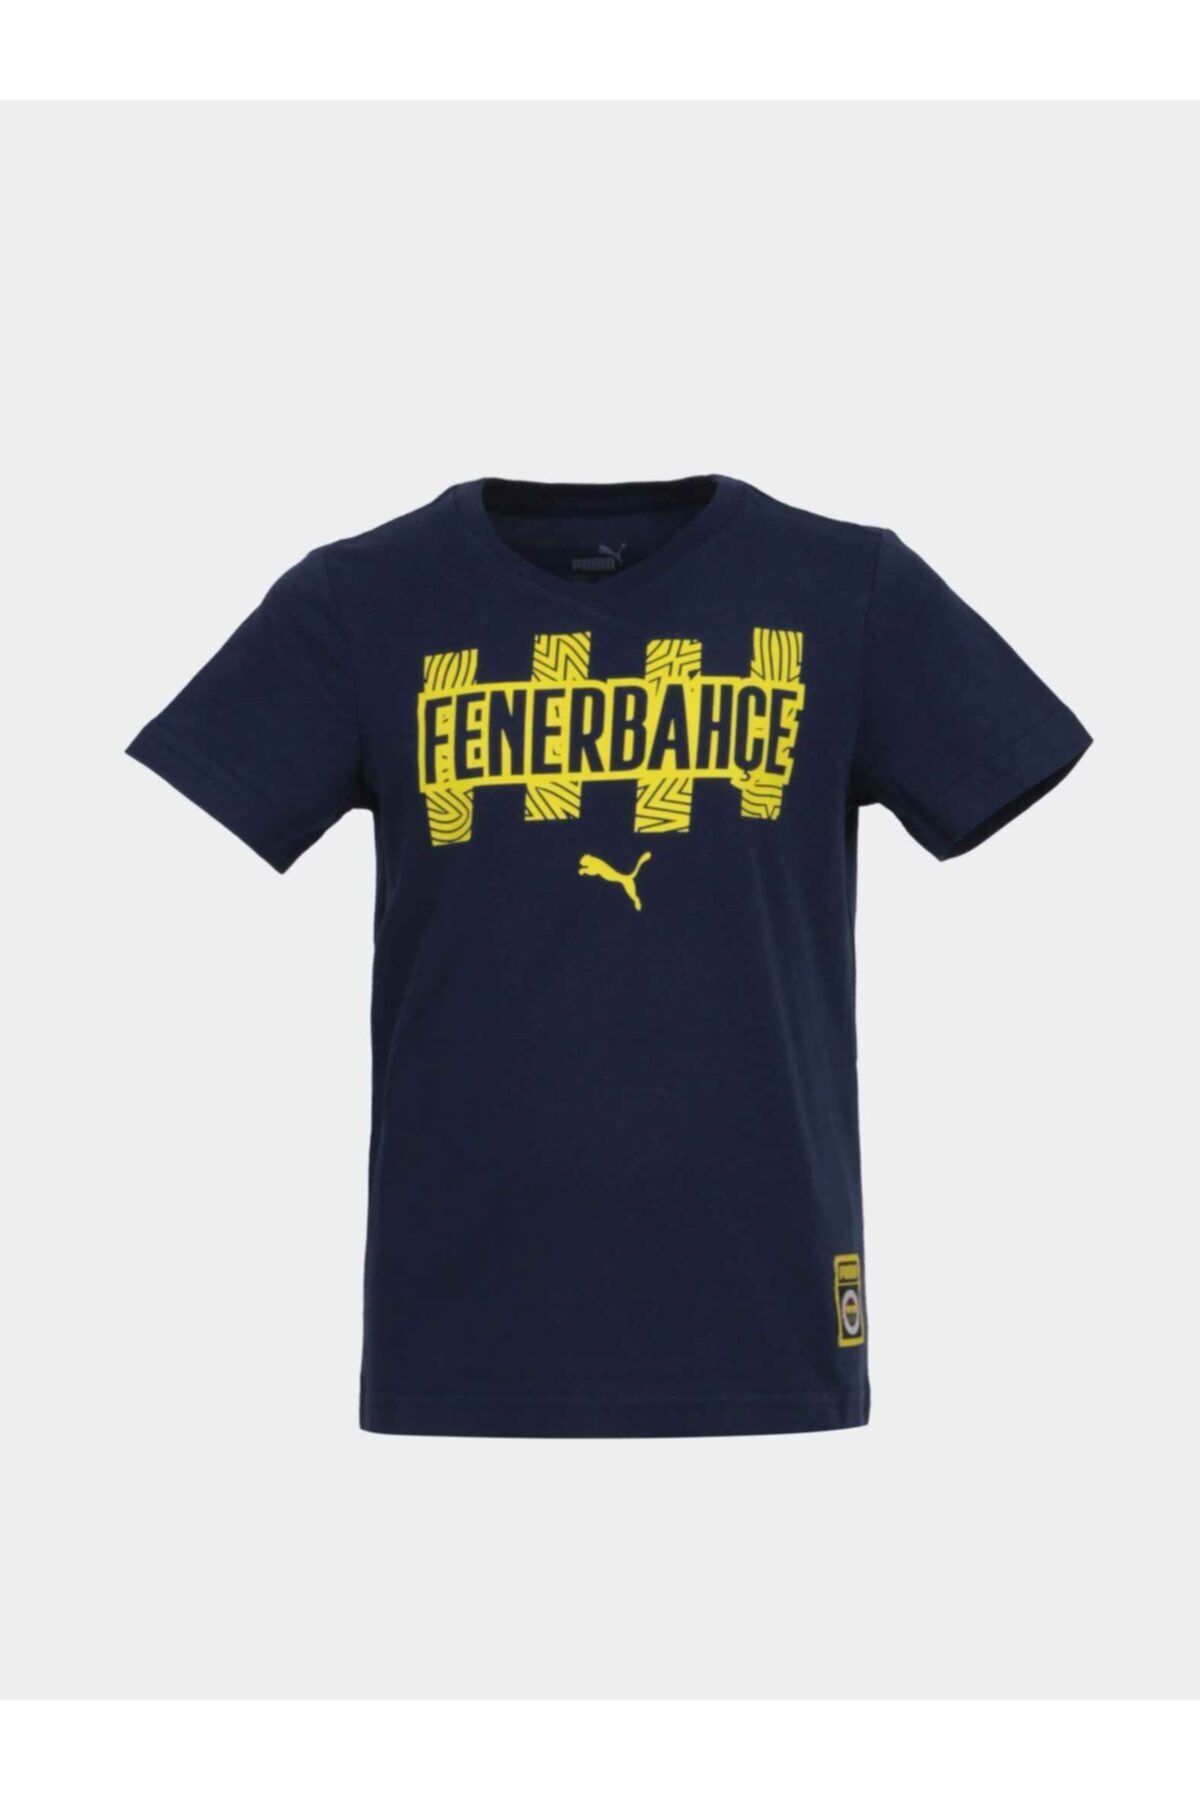 Fenerbahçe Puma Baskılı Jr Lacivert T-Shirt